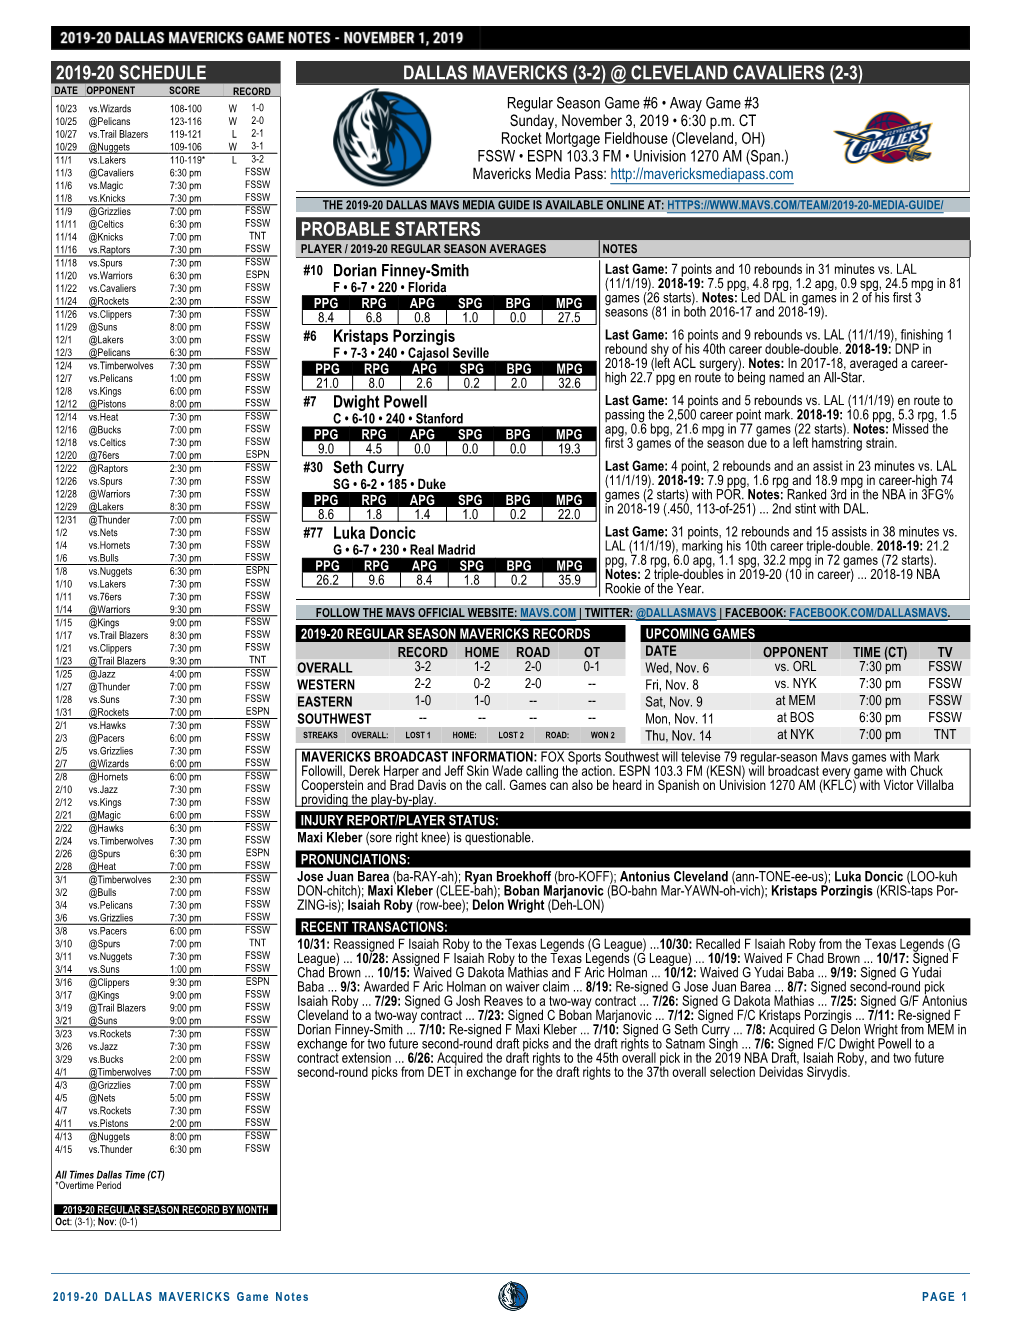 2019-20 Schedule Dallas Mavericks